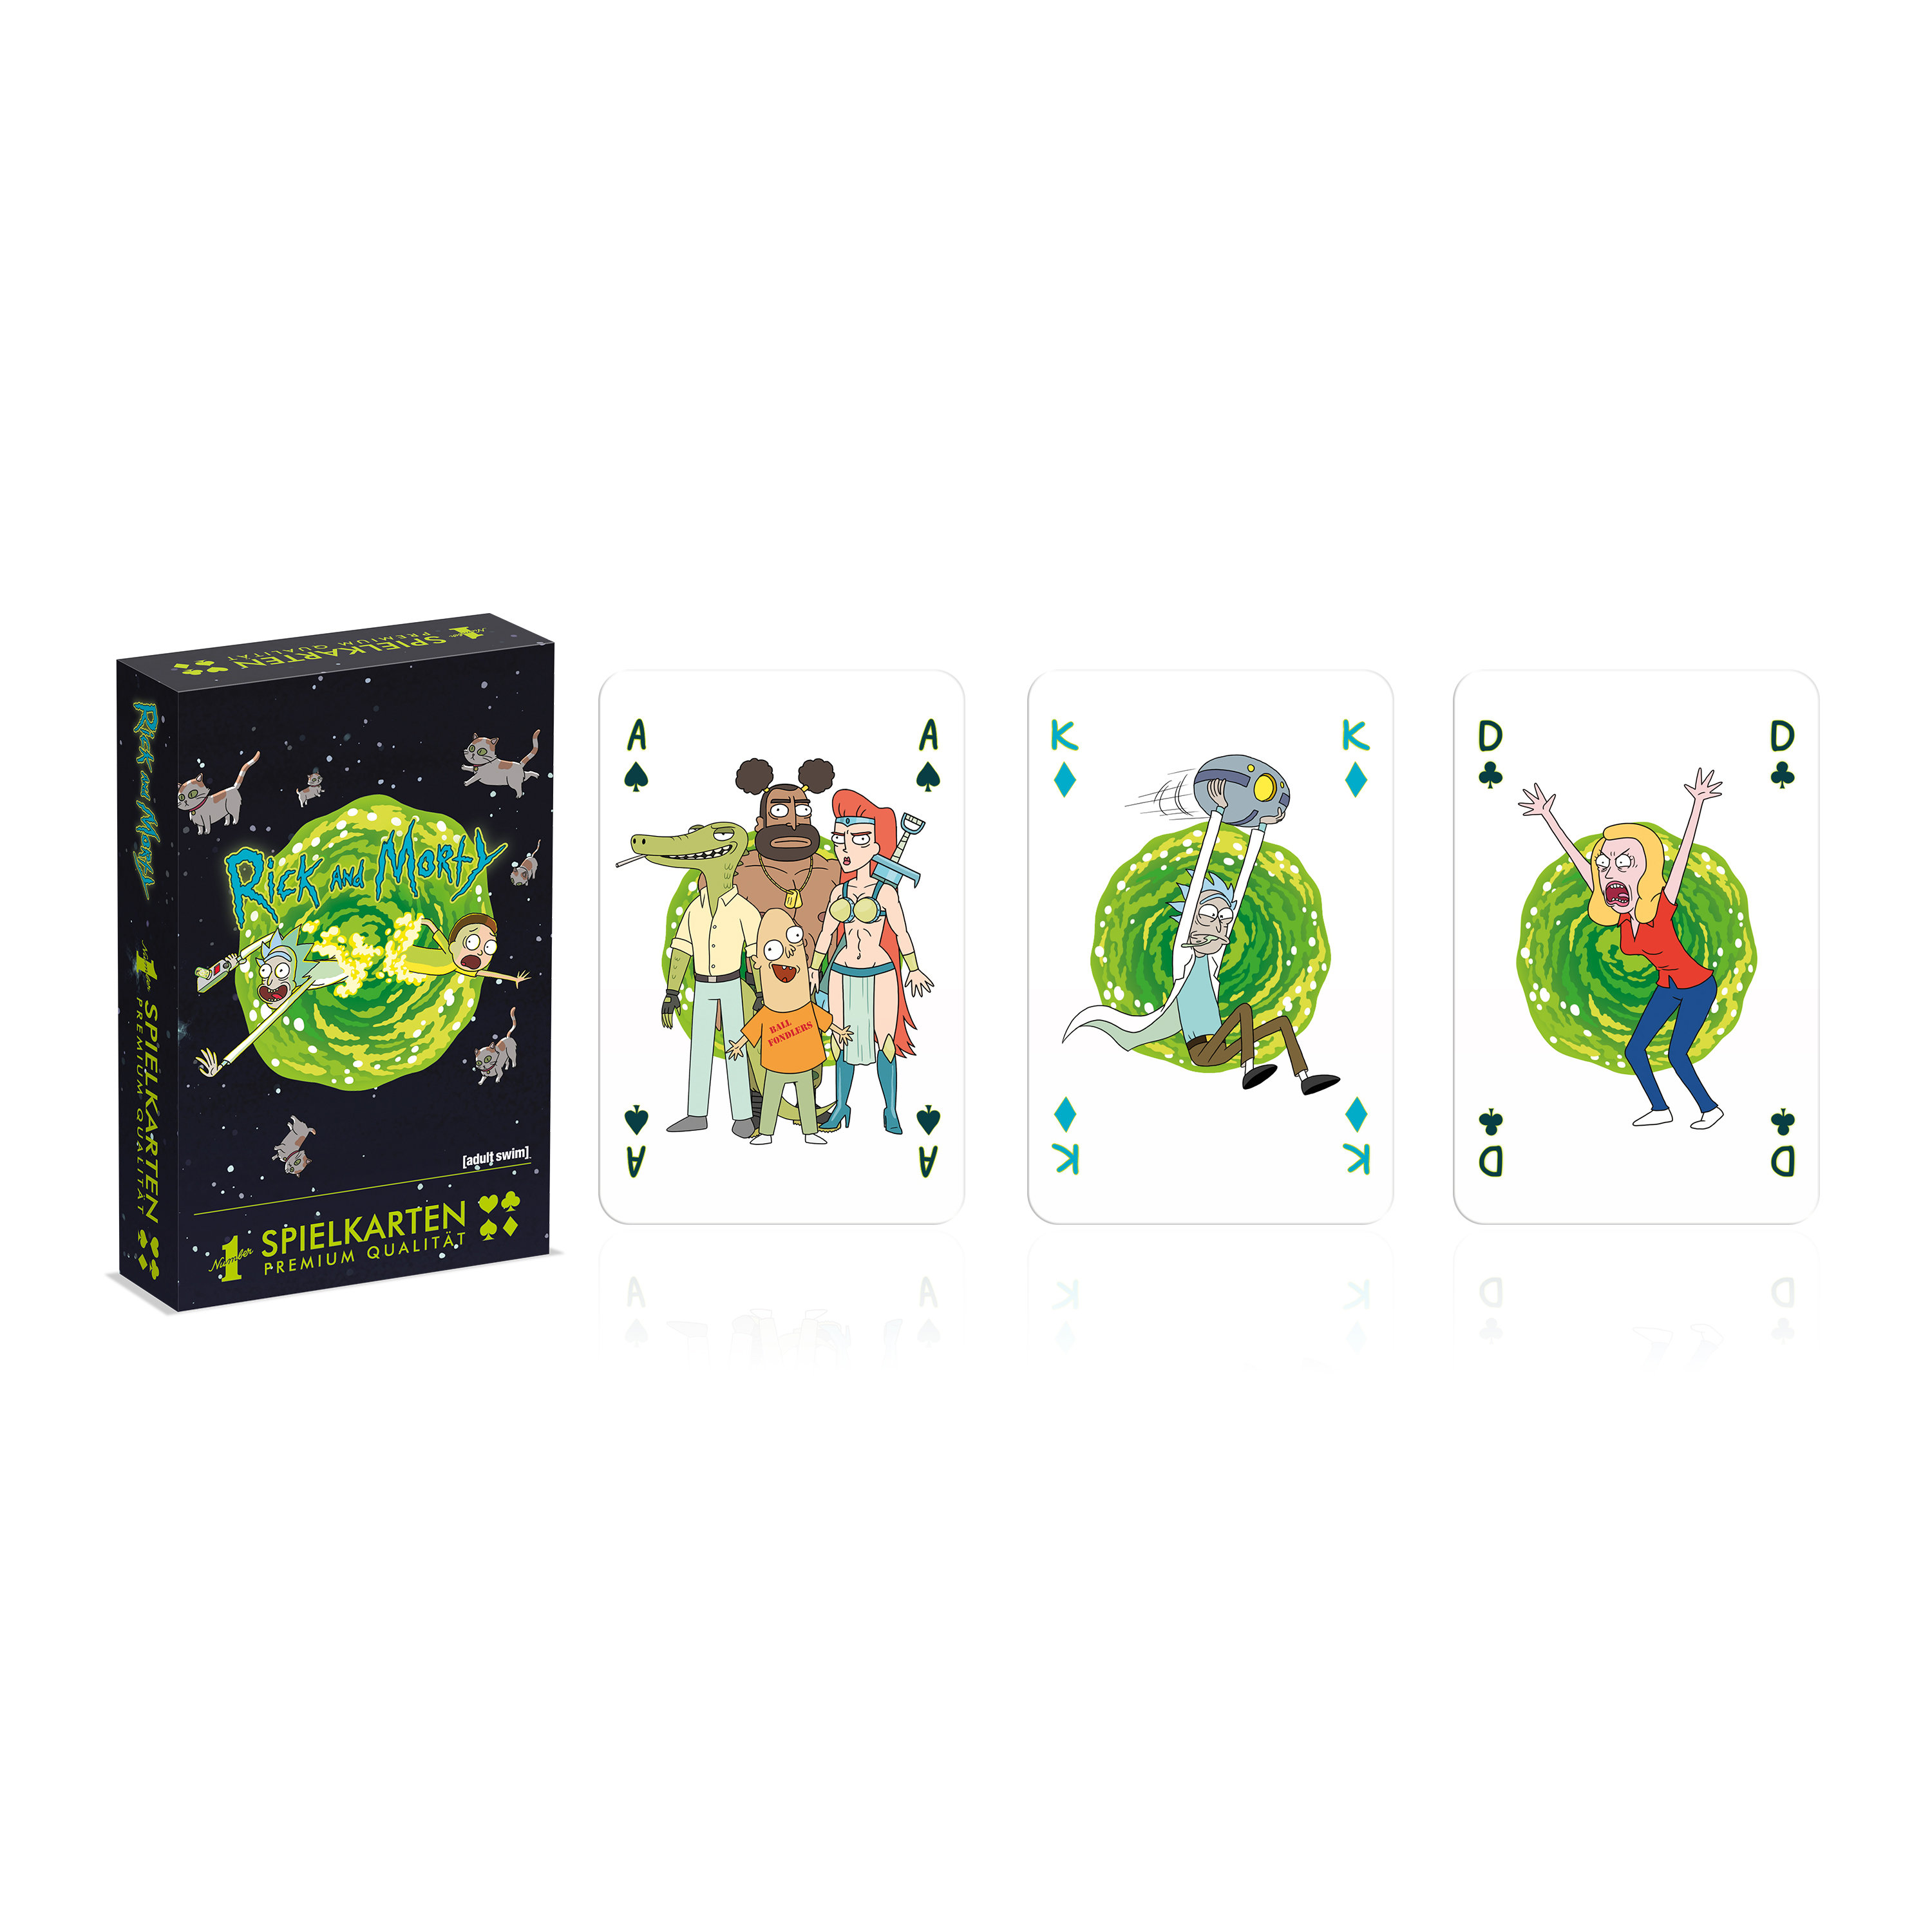 Special Offer: Trivial Pursuit Rick and Morty deutsch + Spielkarten